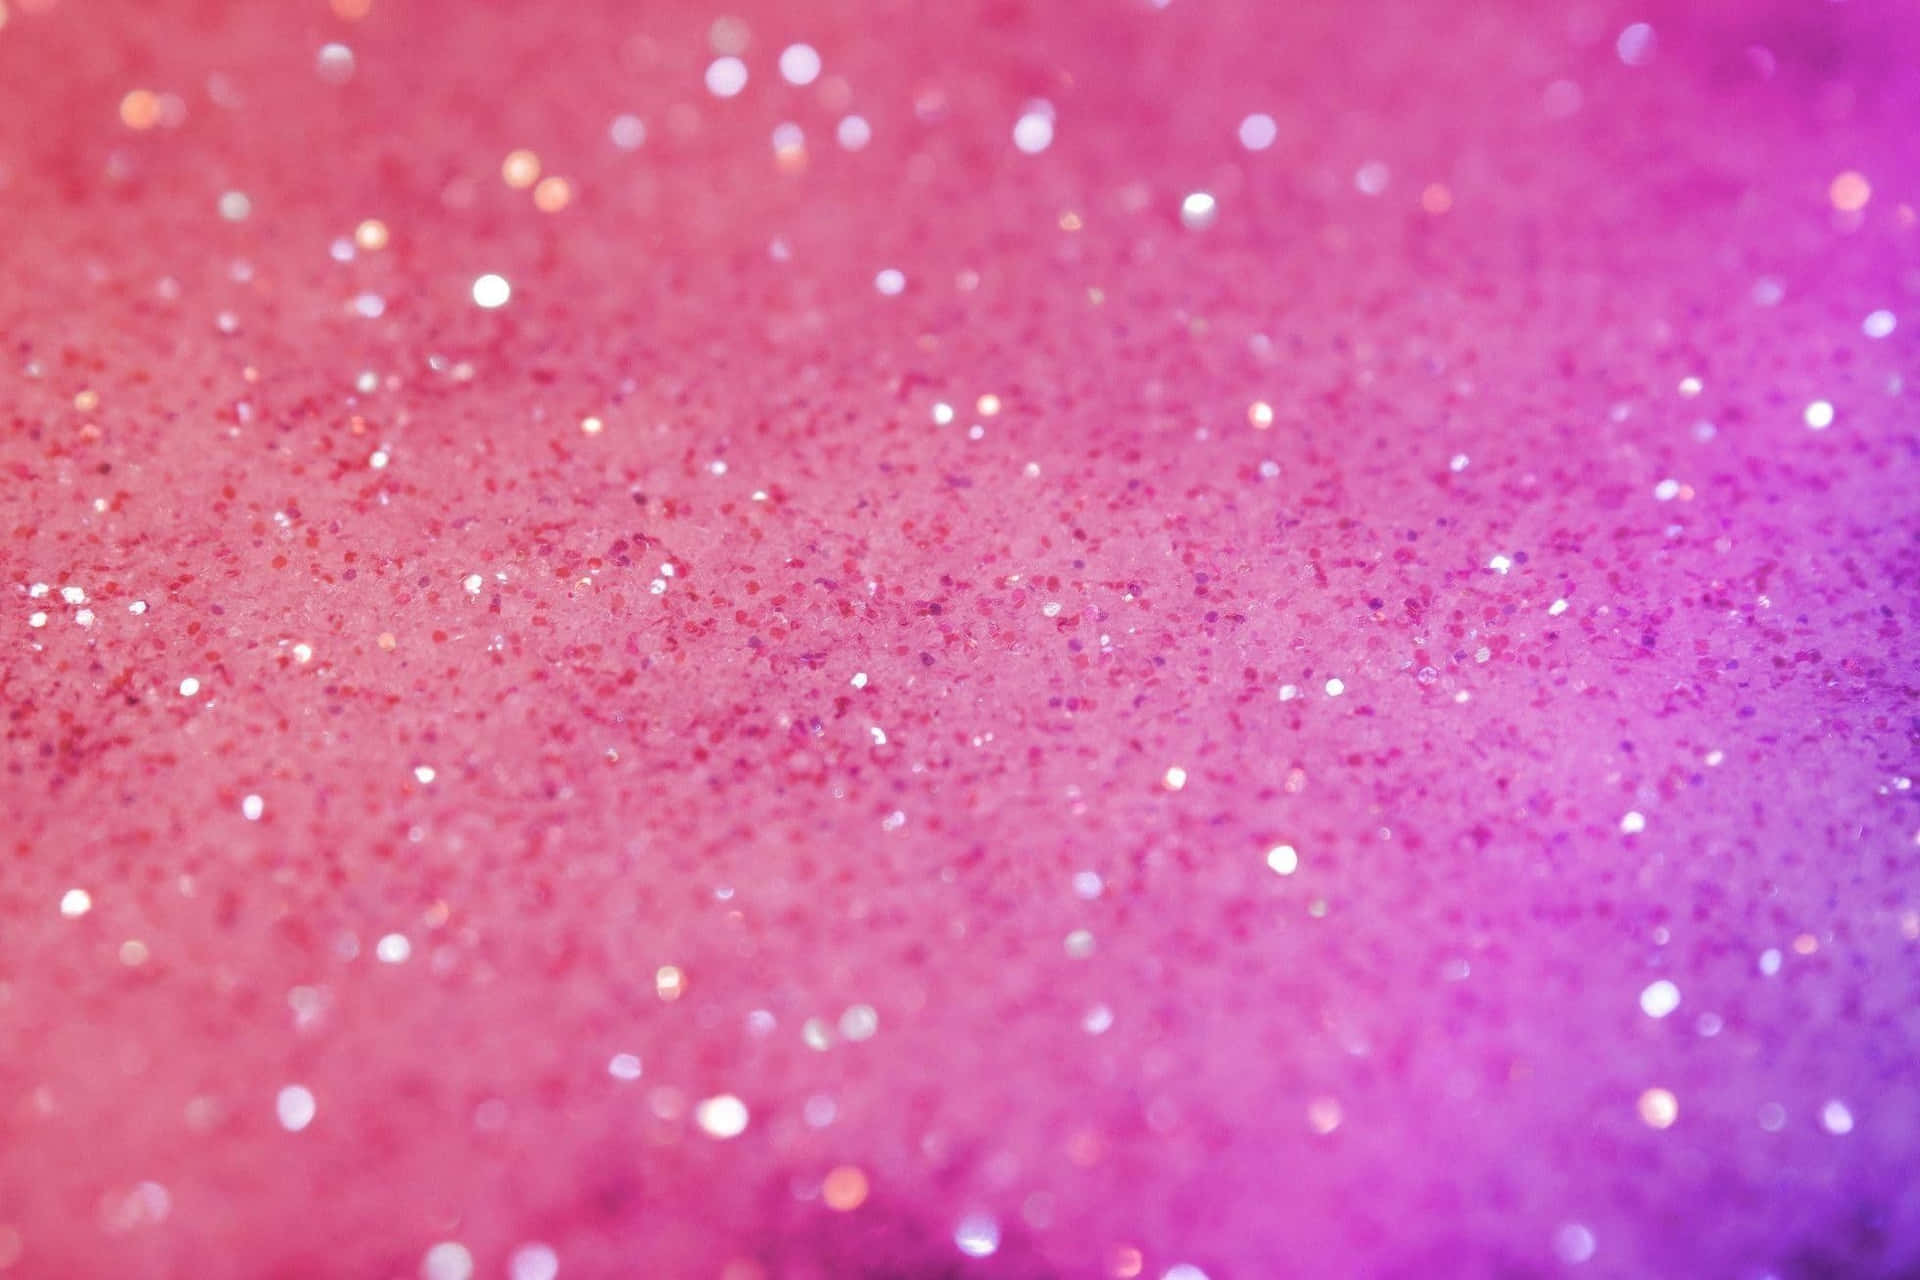 100+] Hot Pink Glitter Backgrounds